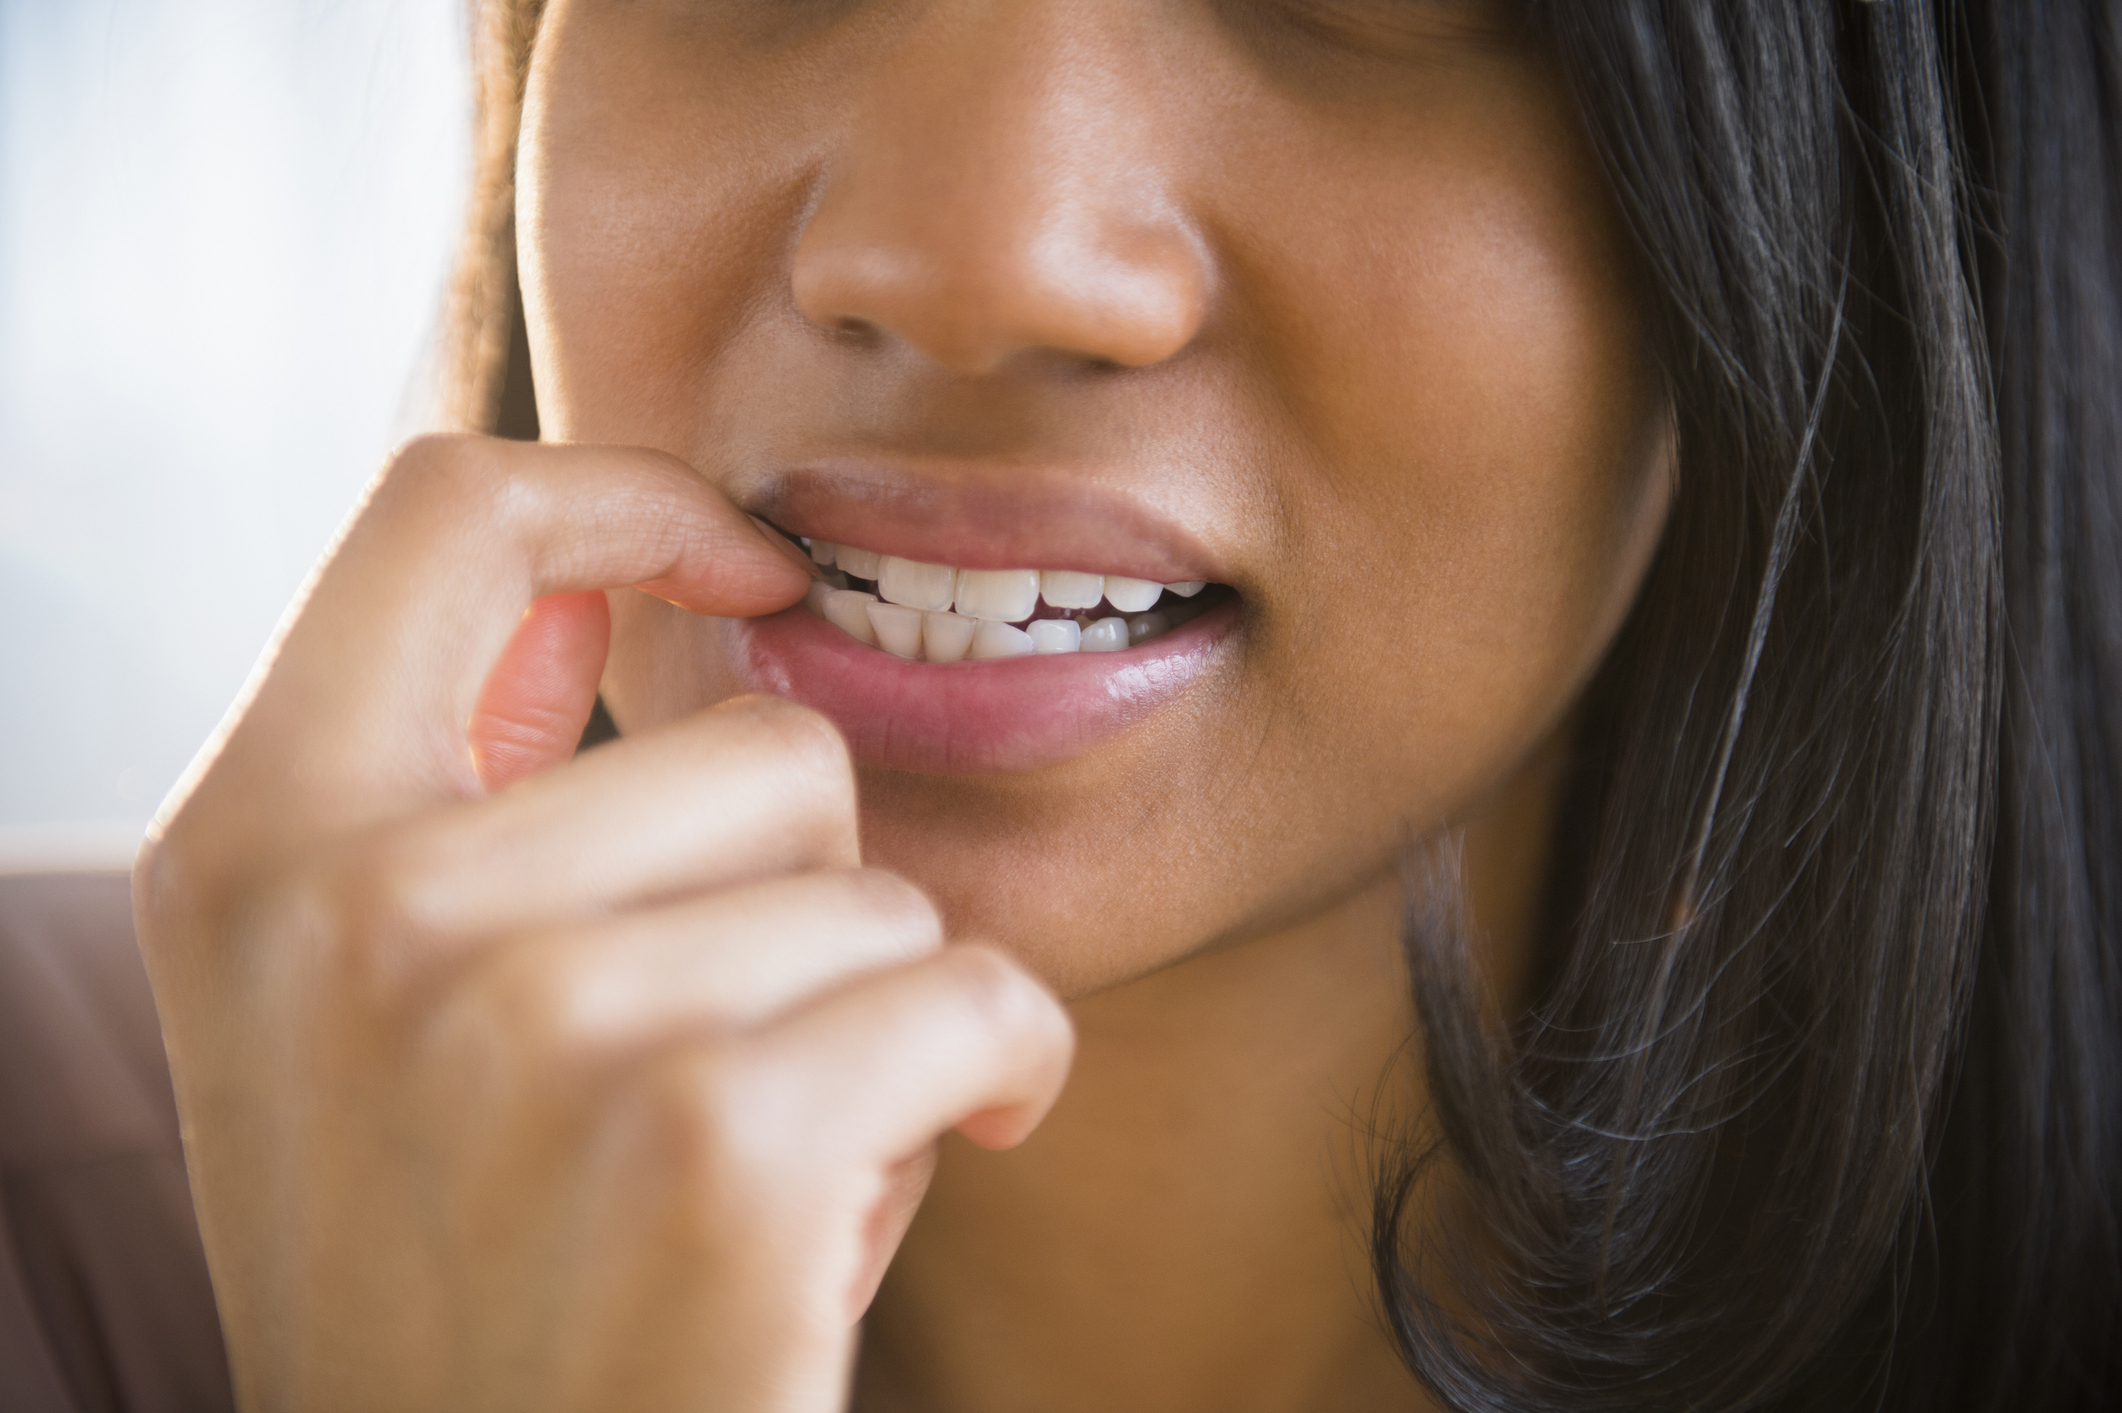 nail biting habit unhealthy risk culture